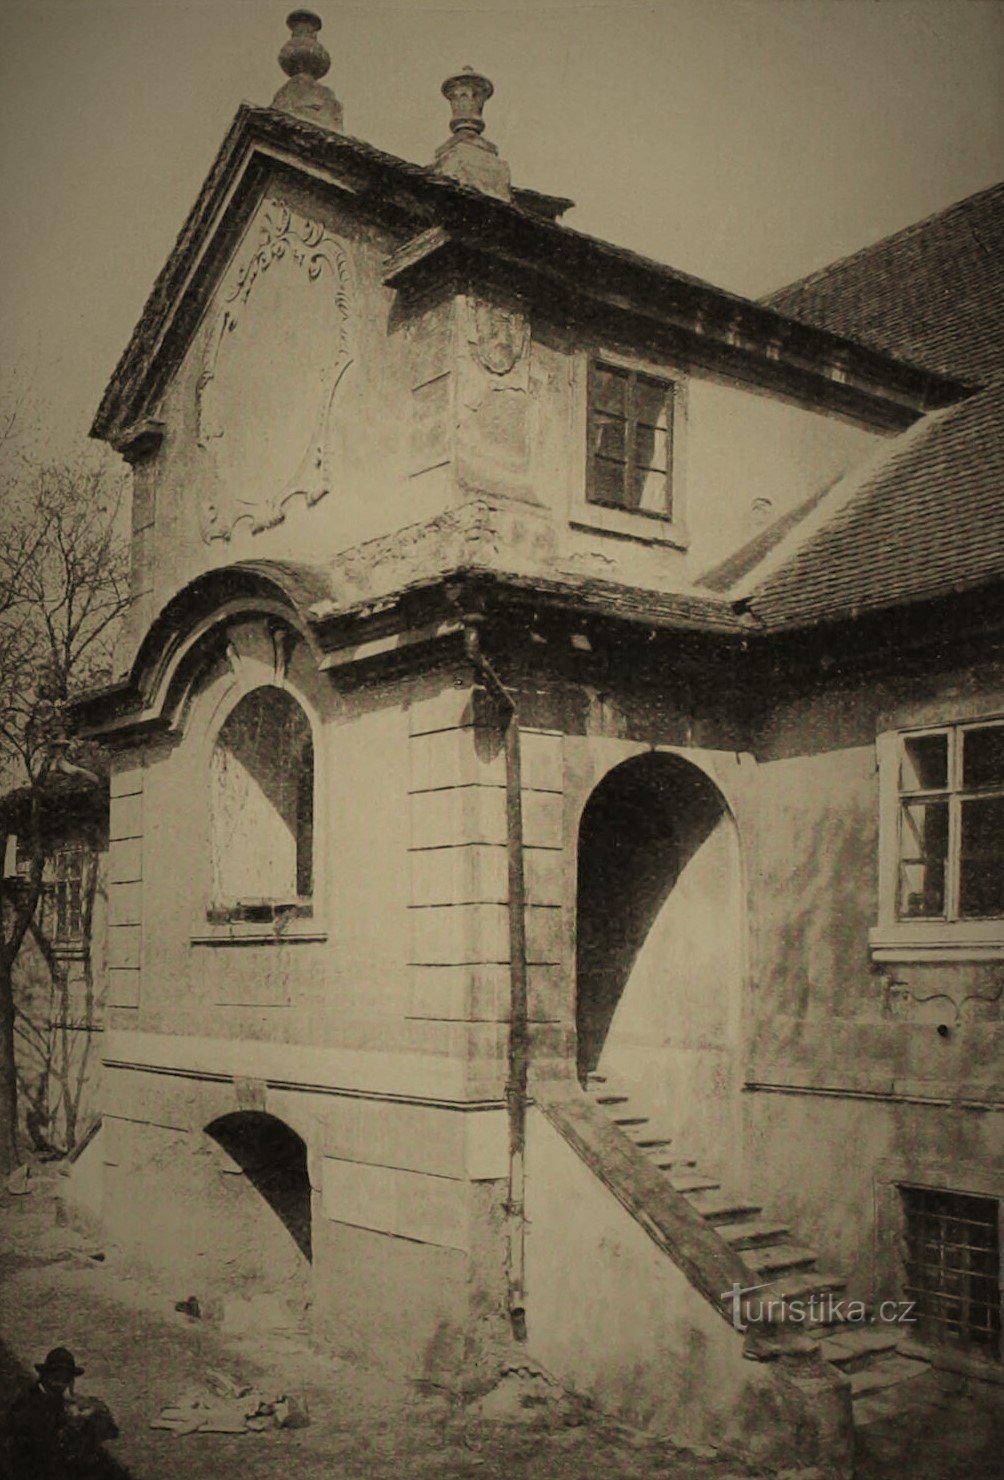 Roudnice nad Labem (1907 年以前) の元の風車の柱廊玄関